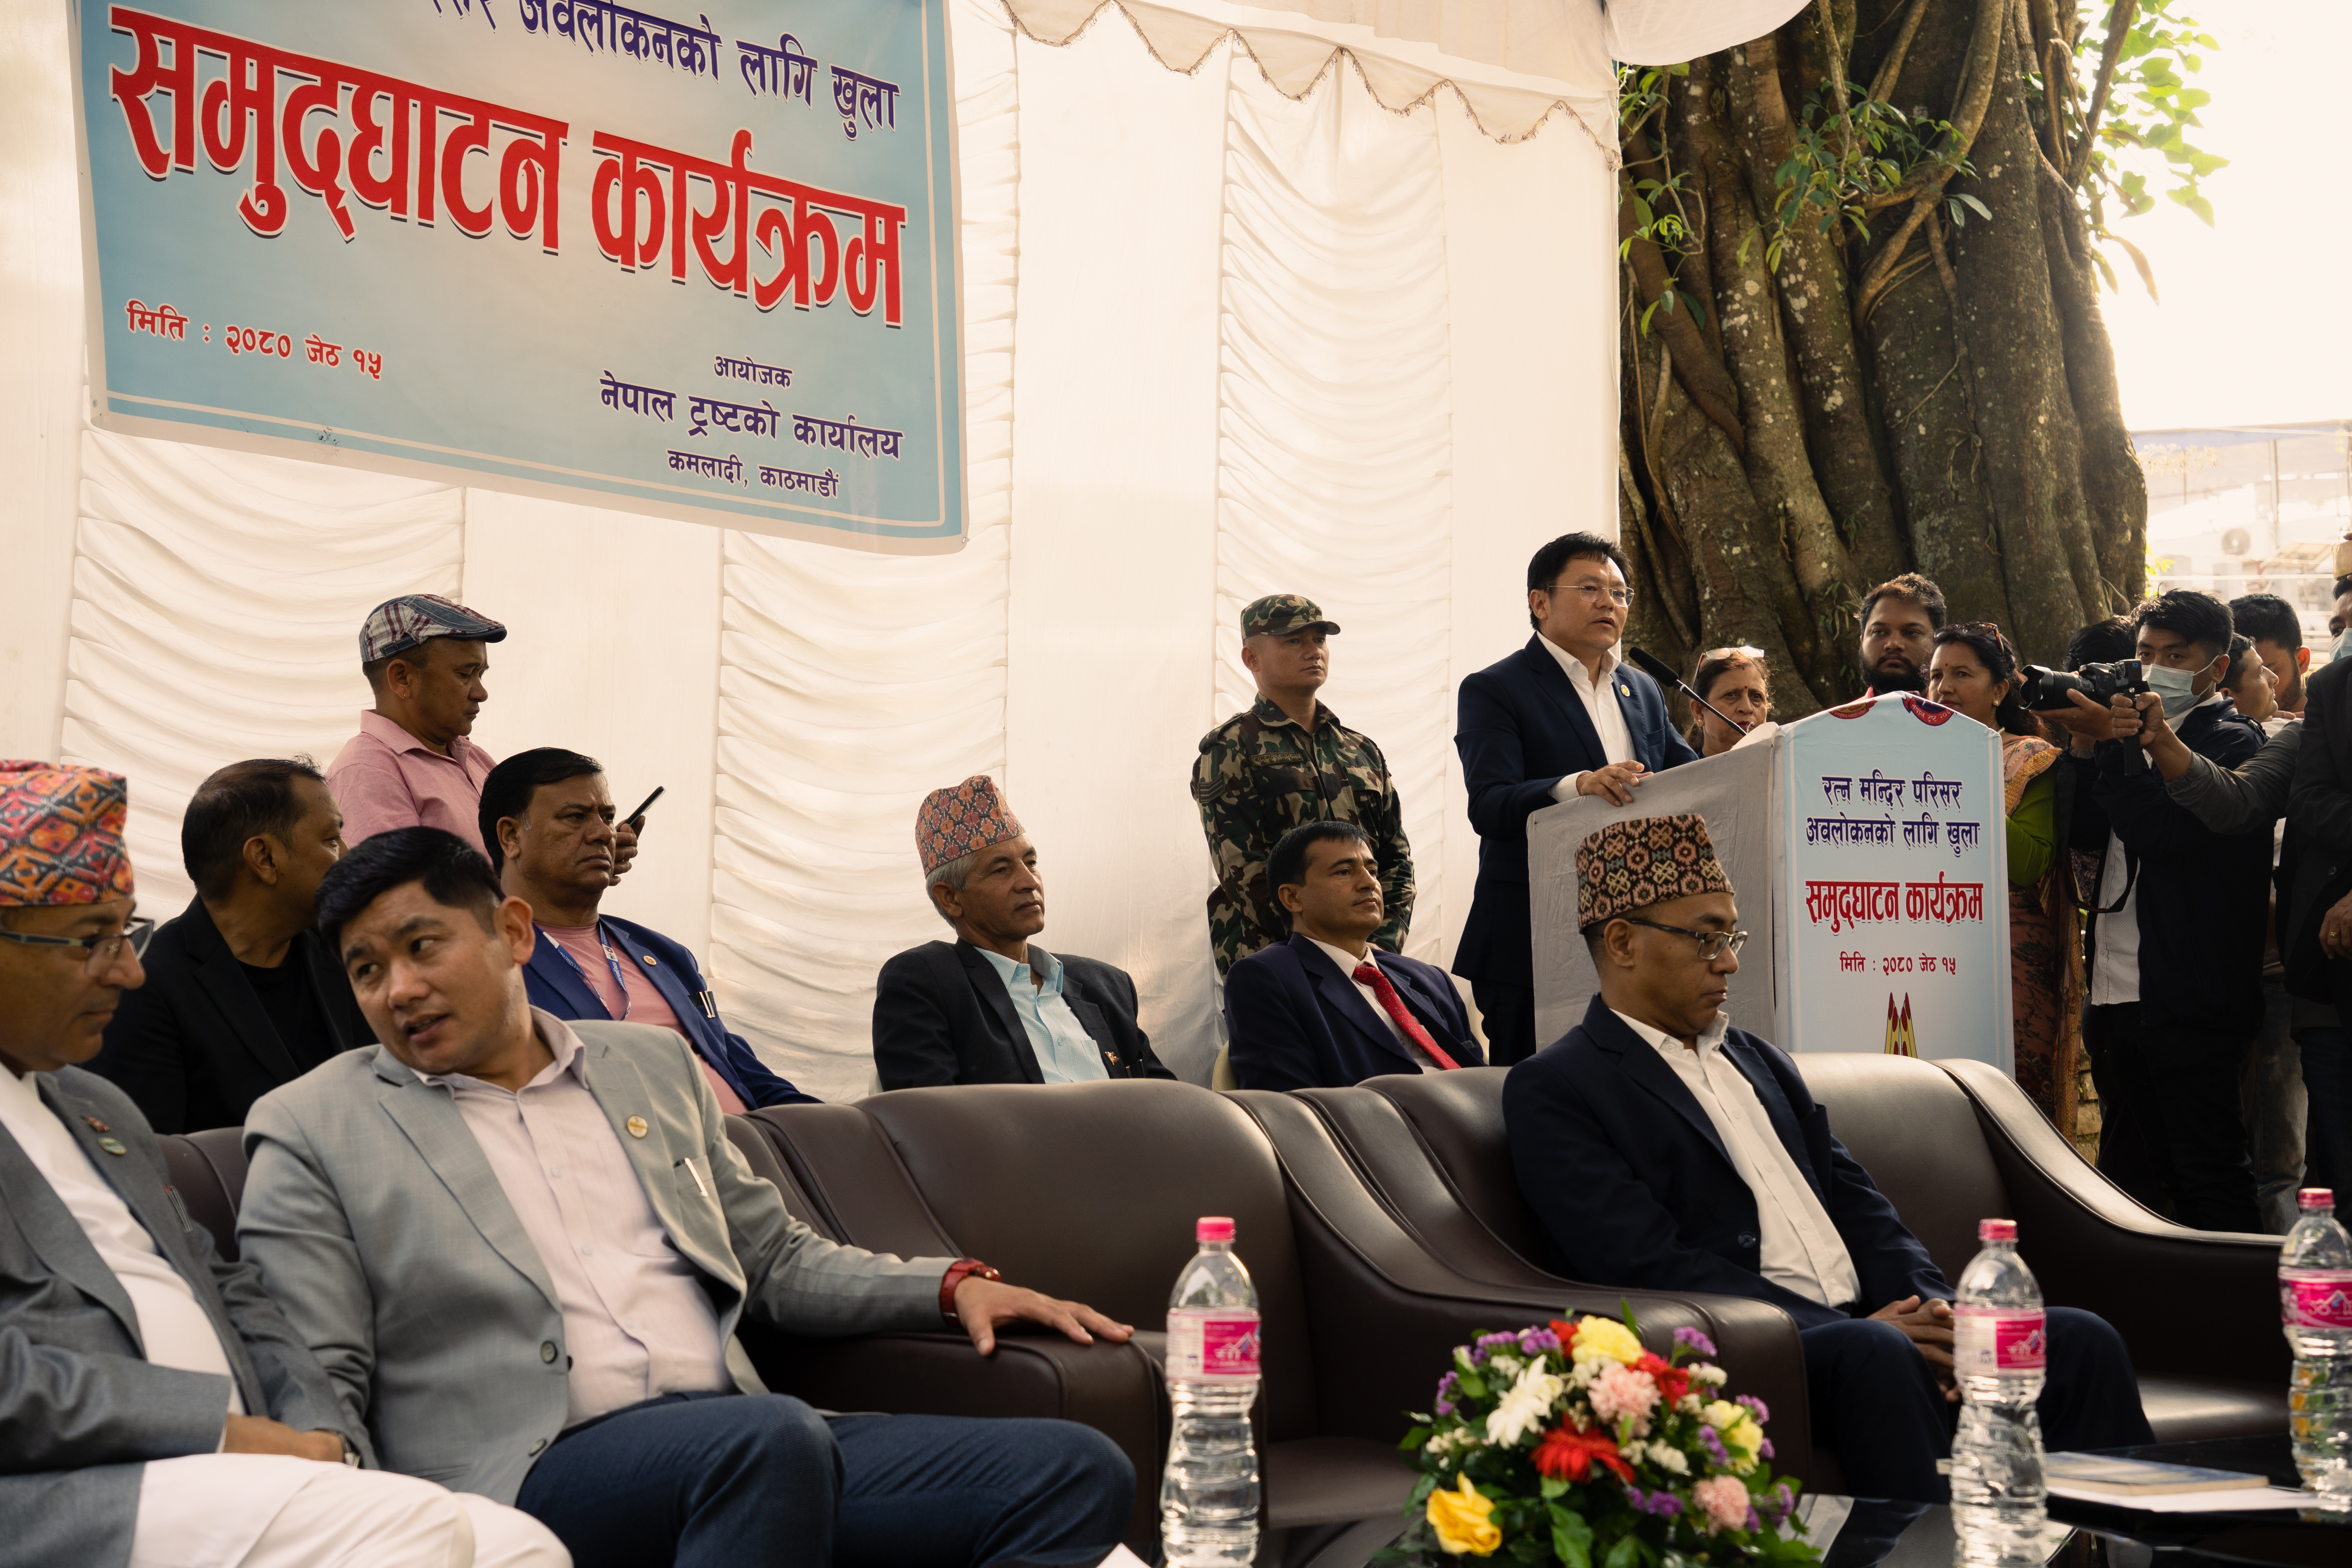 Slider Image: Opening Ceremony Ratna Mandir Pokhara on 15th Jesth 2080